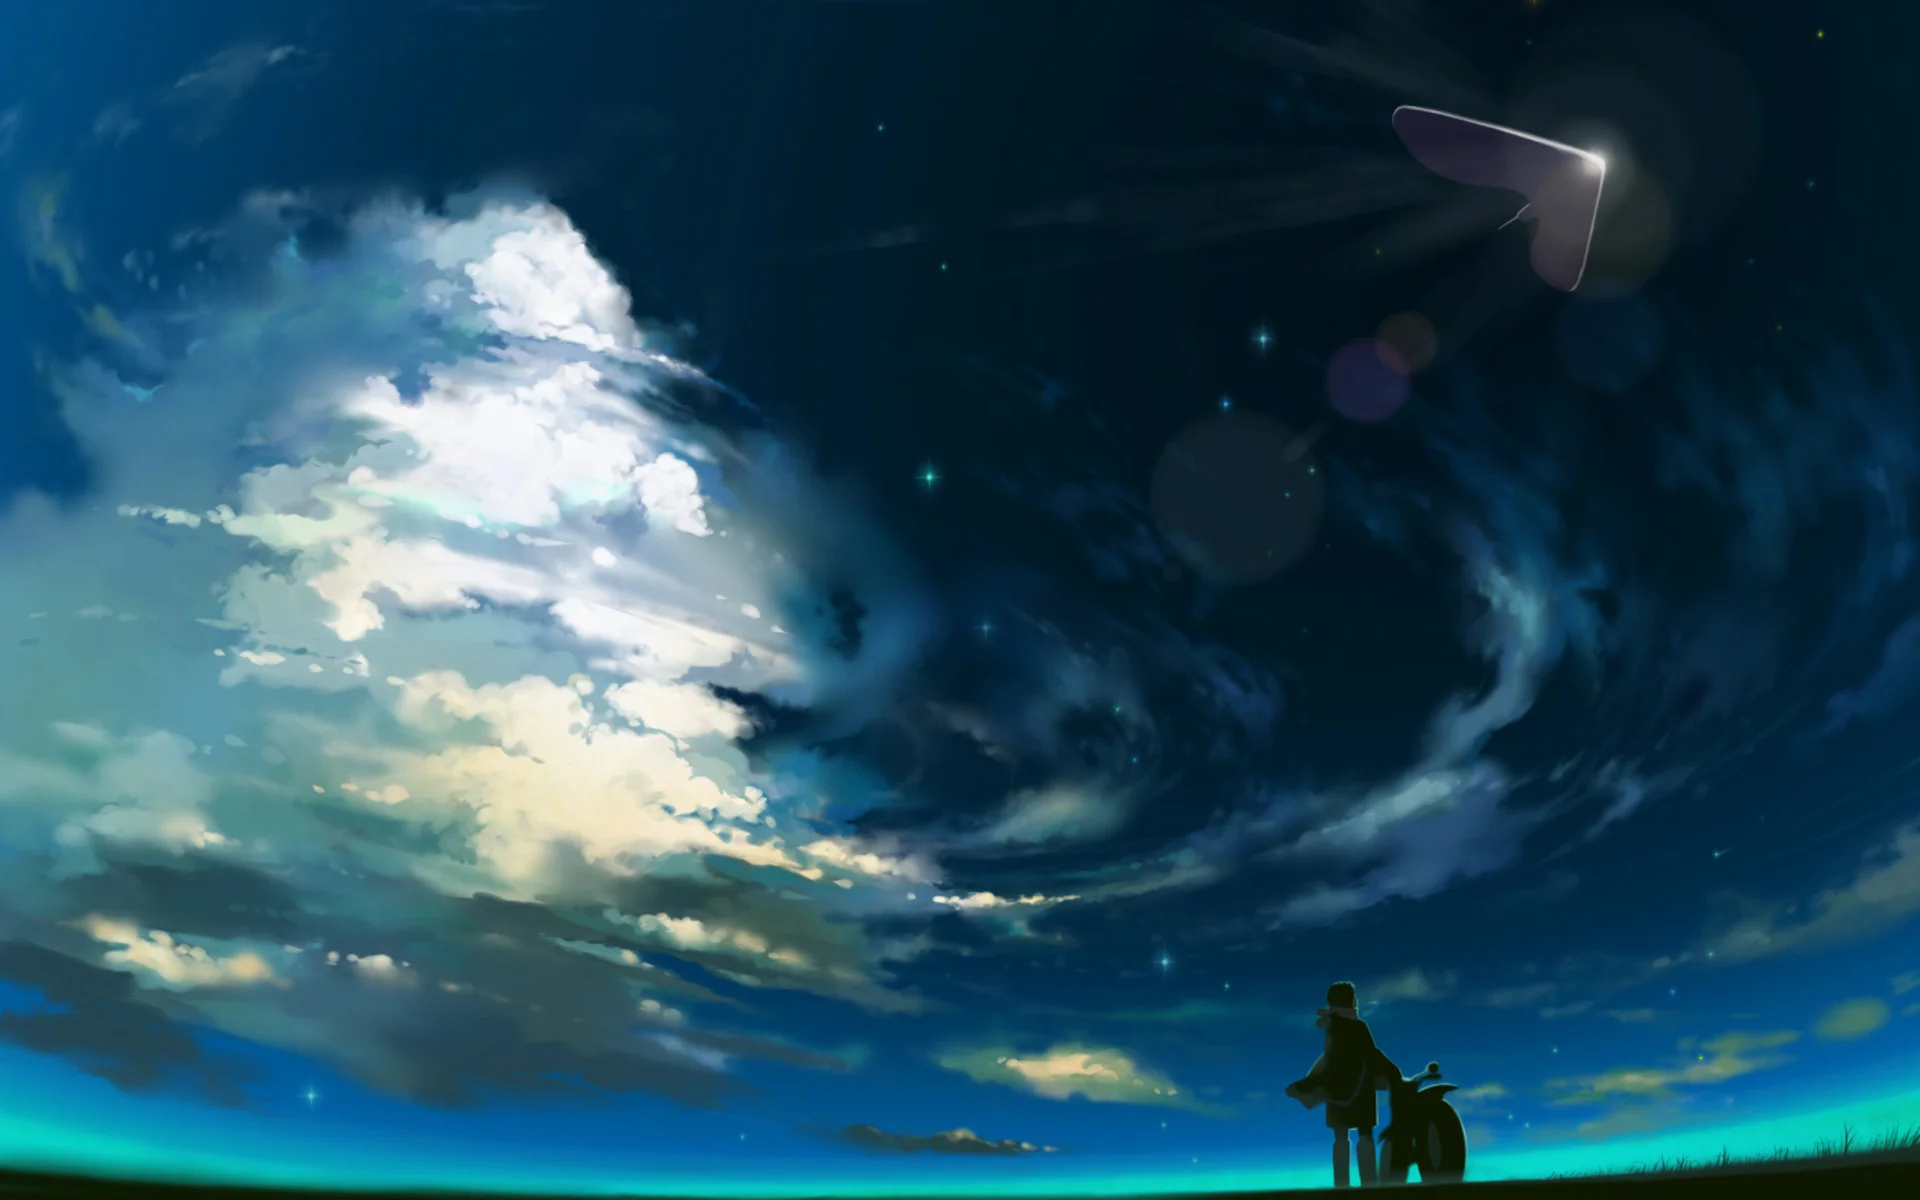 Beautiful Anime Scenery Wallpaper